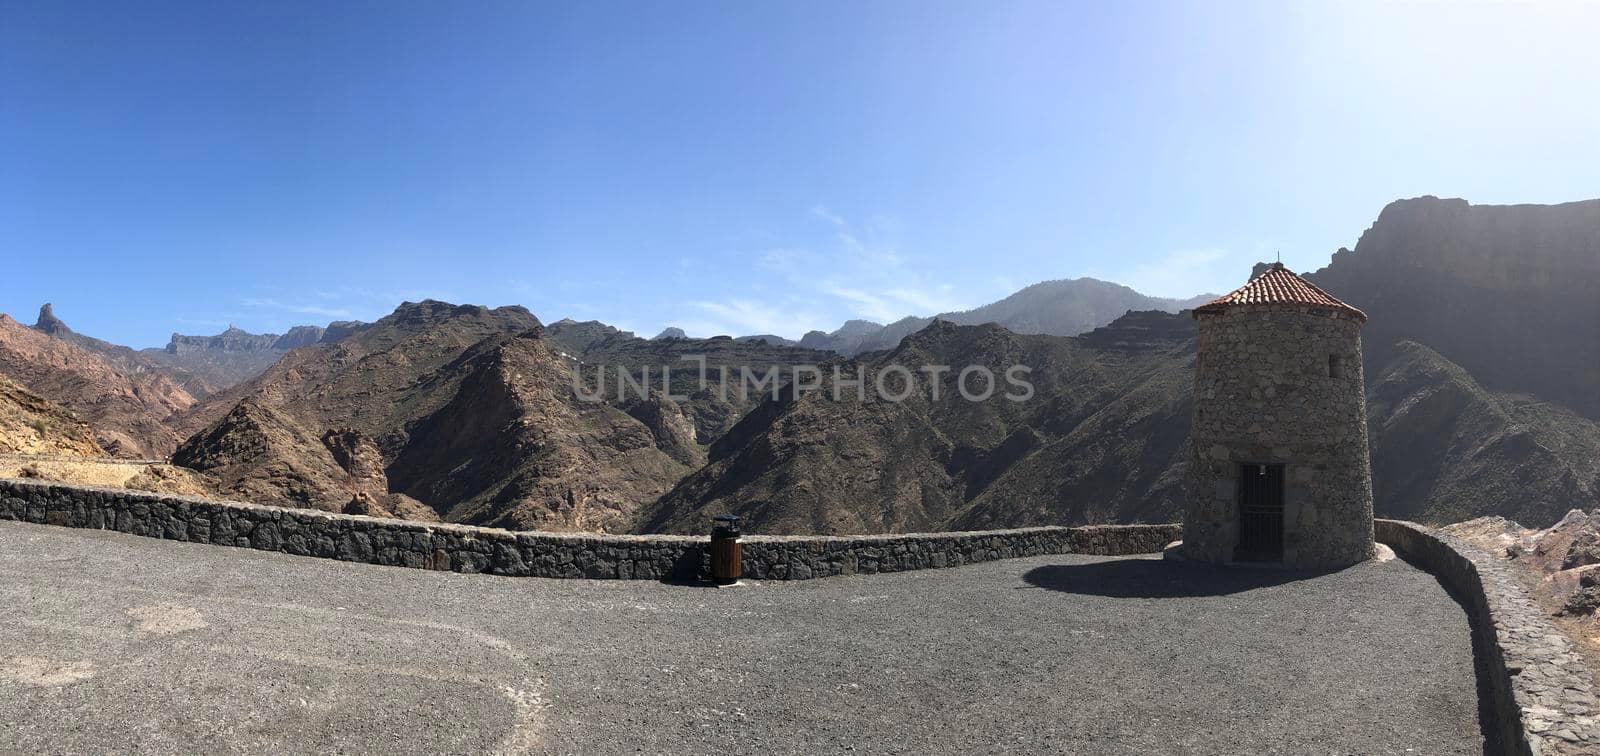 Panorama from the scenery Mirador del Molino on Gran Canaria island